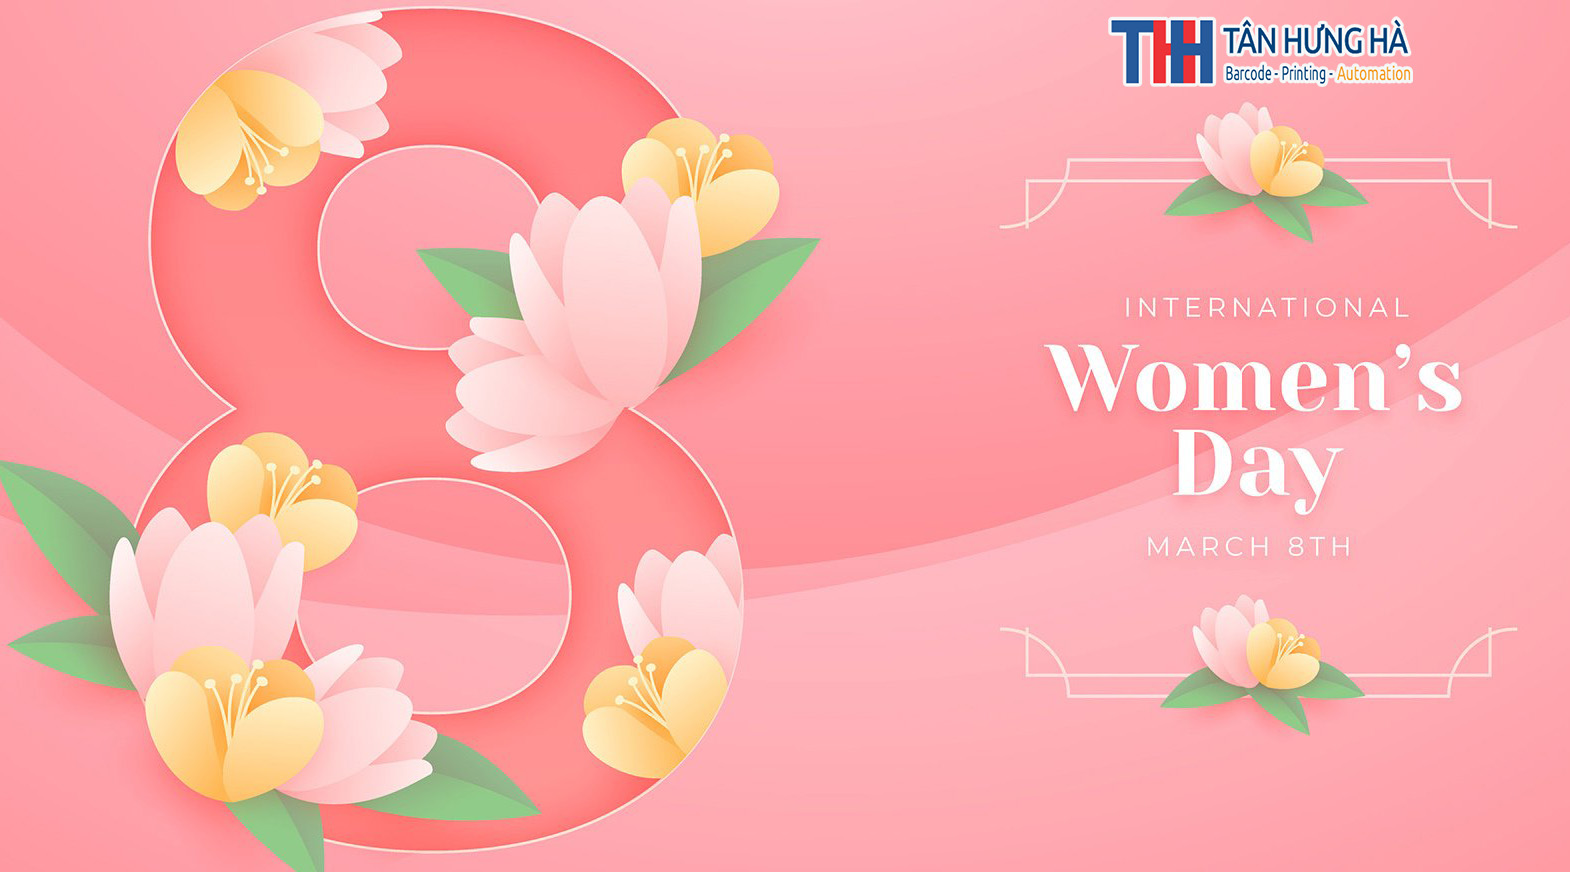 TAN HUNG HA CONGRATULATES INTERNATIONAL WOMEN DAY MARCH 8TH